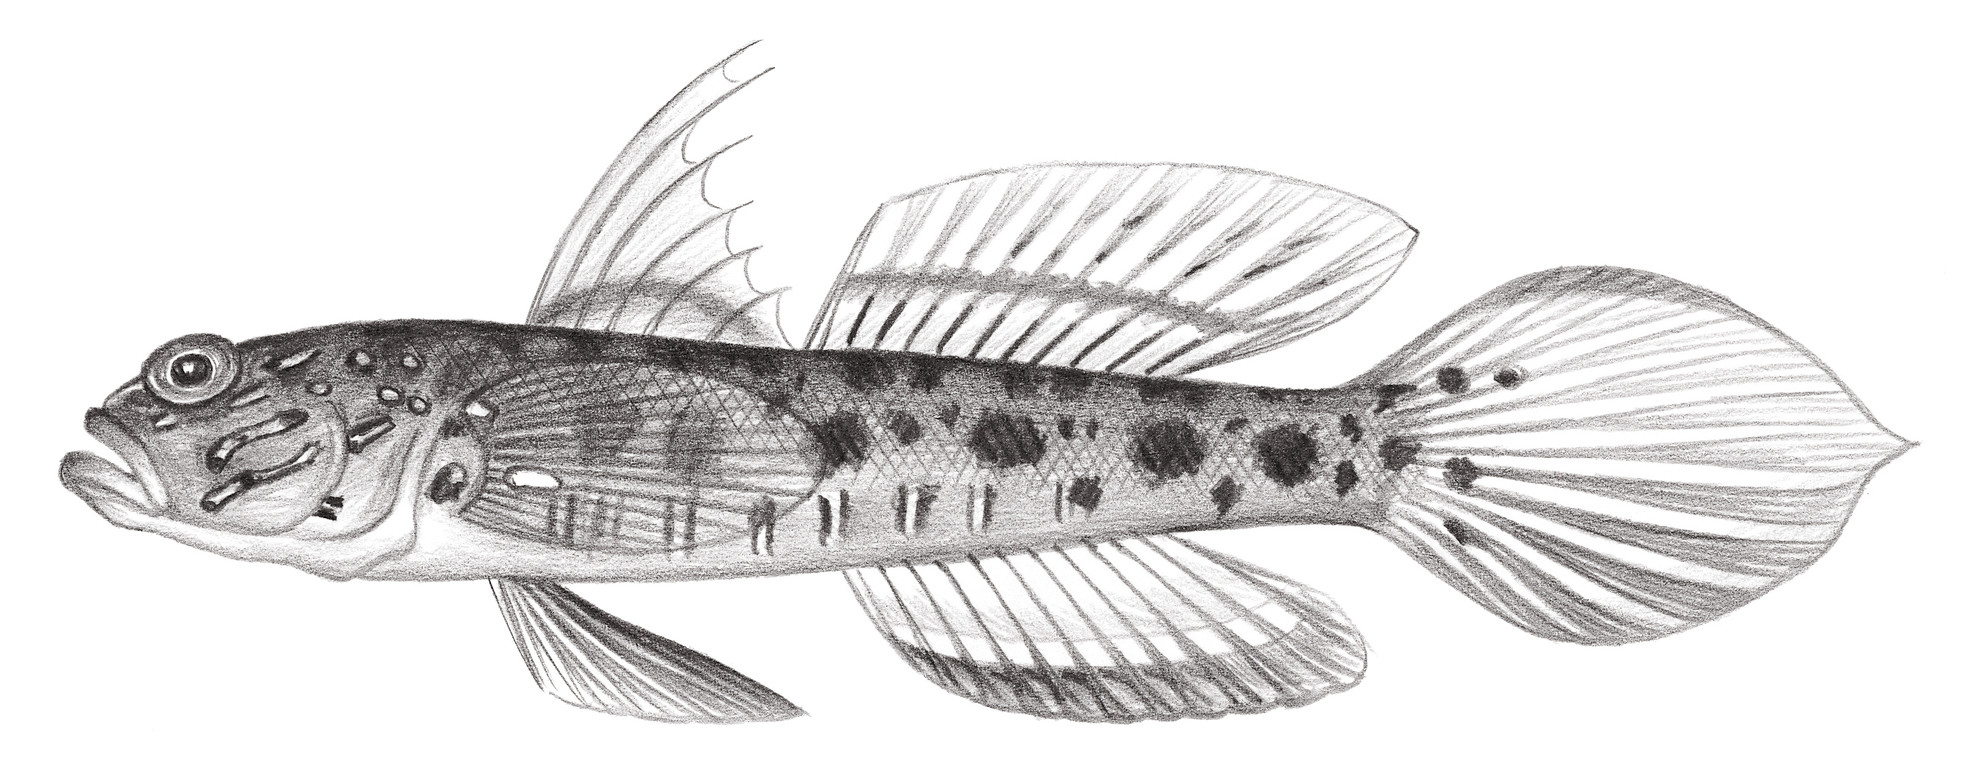 2113.	黃斑櫛鰕虎 Ctenogobips aurocingulus (Herre, 1935)